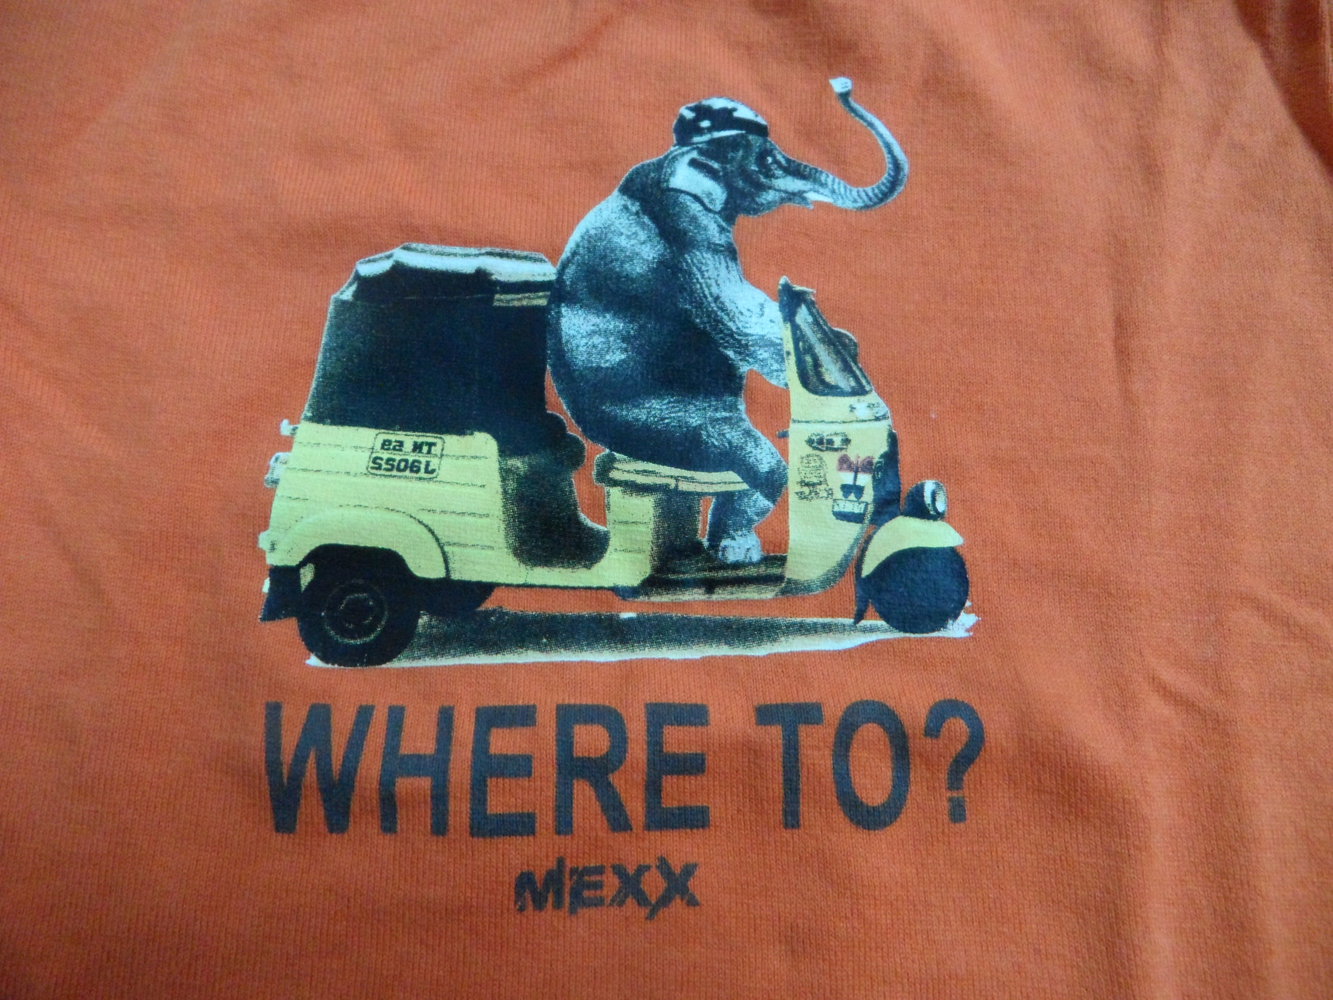 Mexx cooles witziges Langarmshirt mit Elefant auf Roller